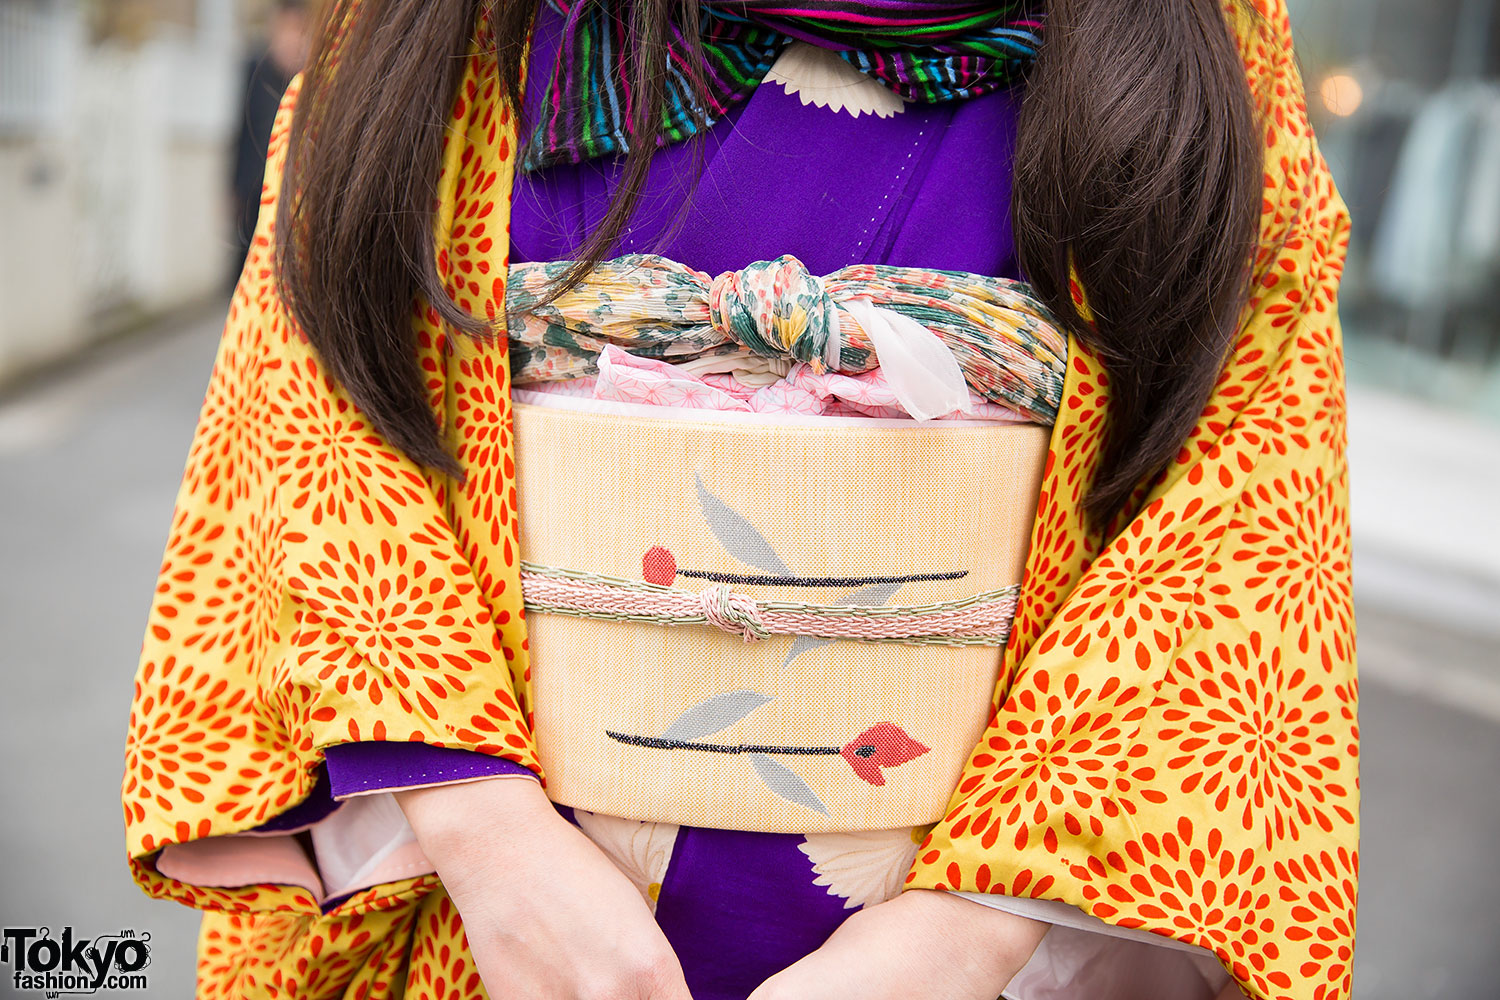 Kimono w/ Vivienne Westwood Heart Bag & Dr. Martens in Harajuku